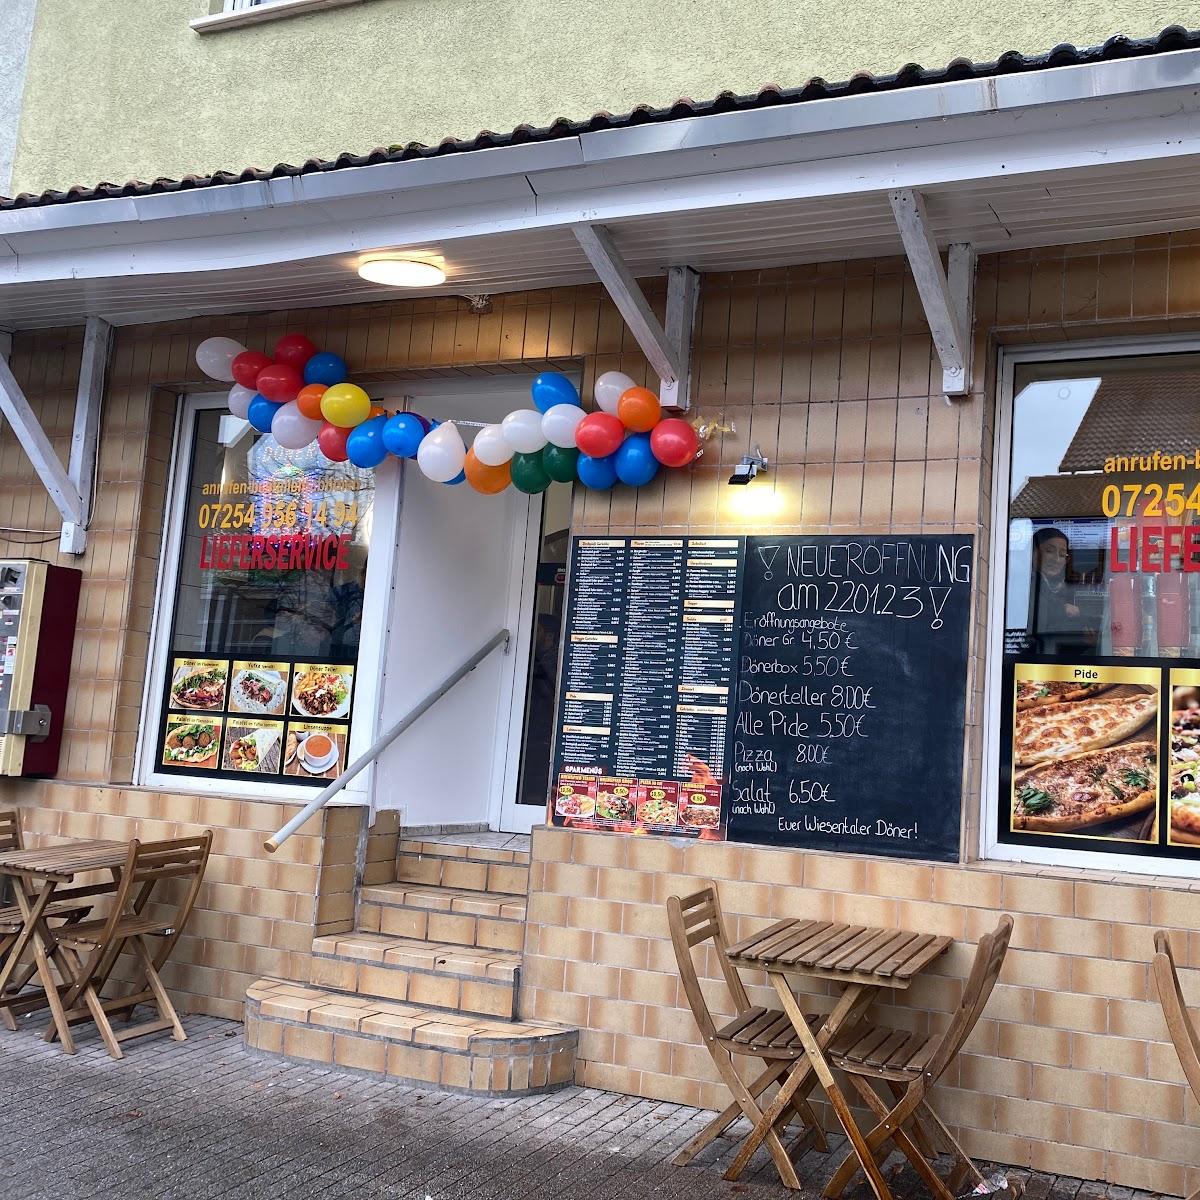 Restaurant "Wiesentaler Döner & Pizza" in Waghäusel